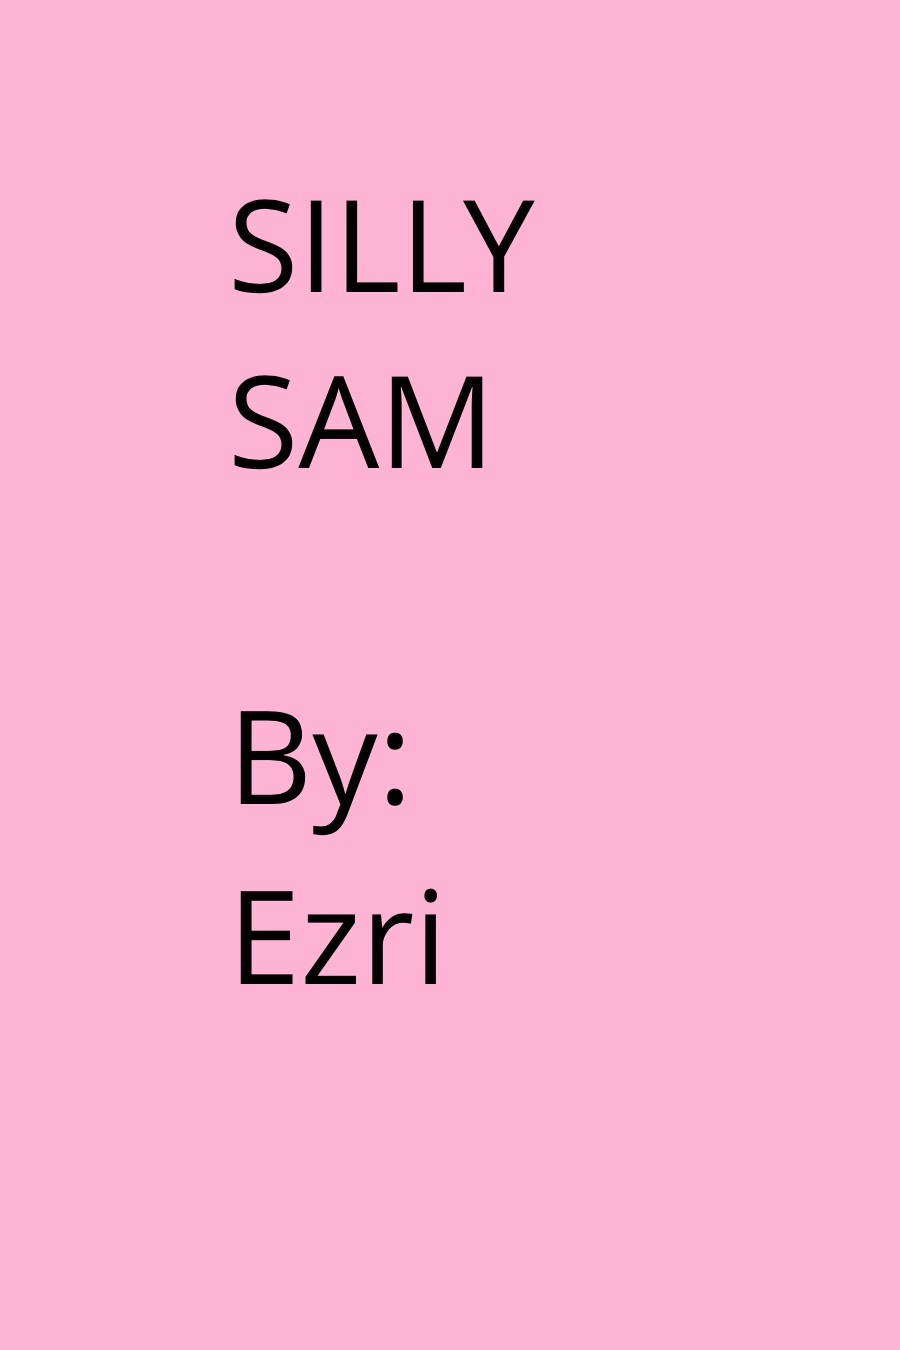 Silly Sam by Ezri V